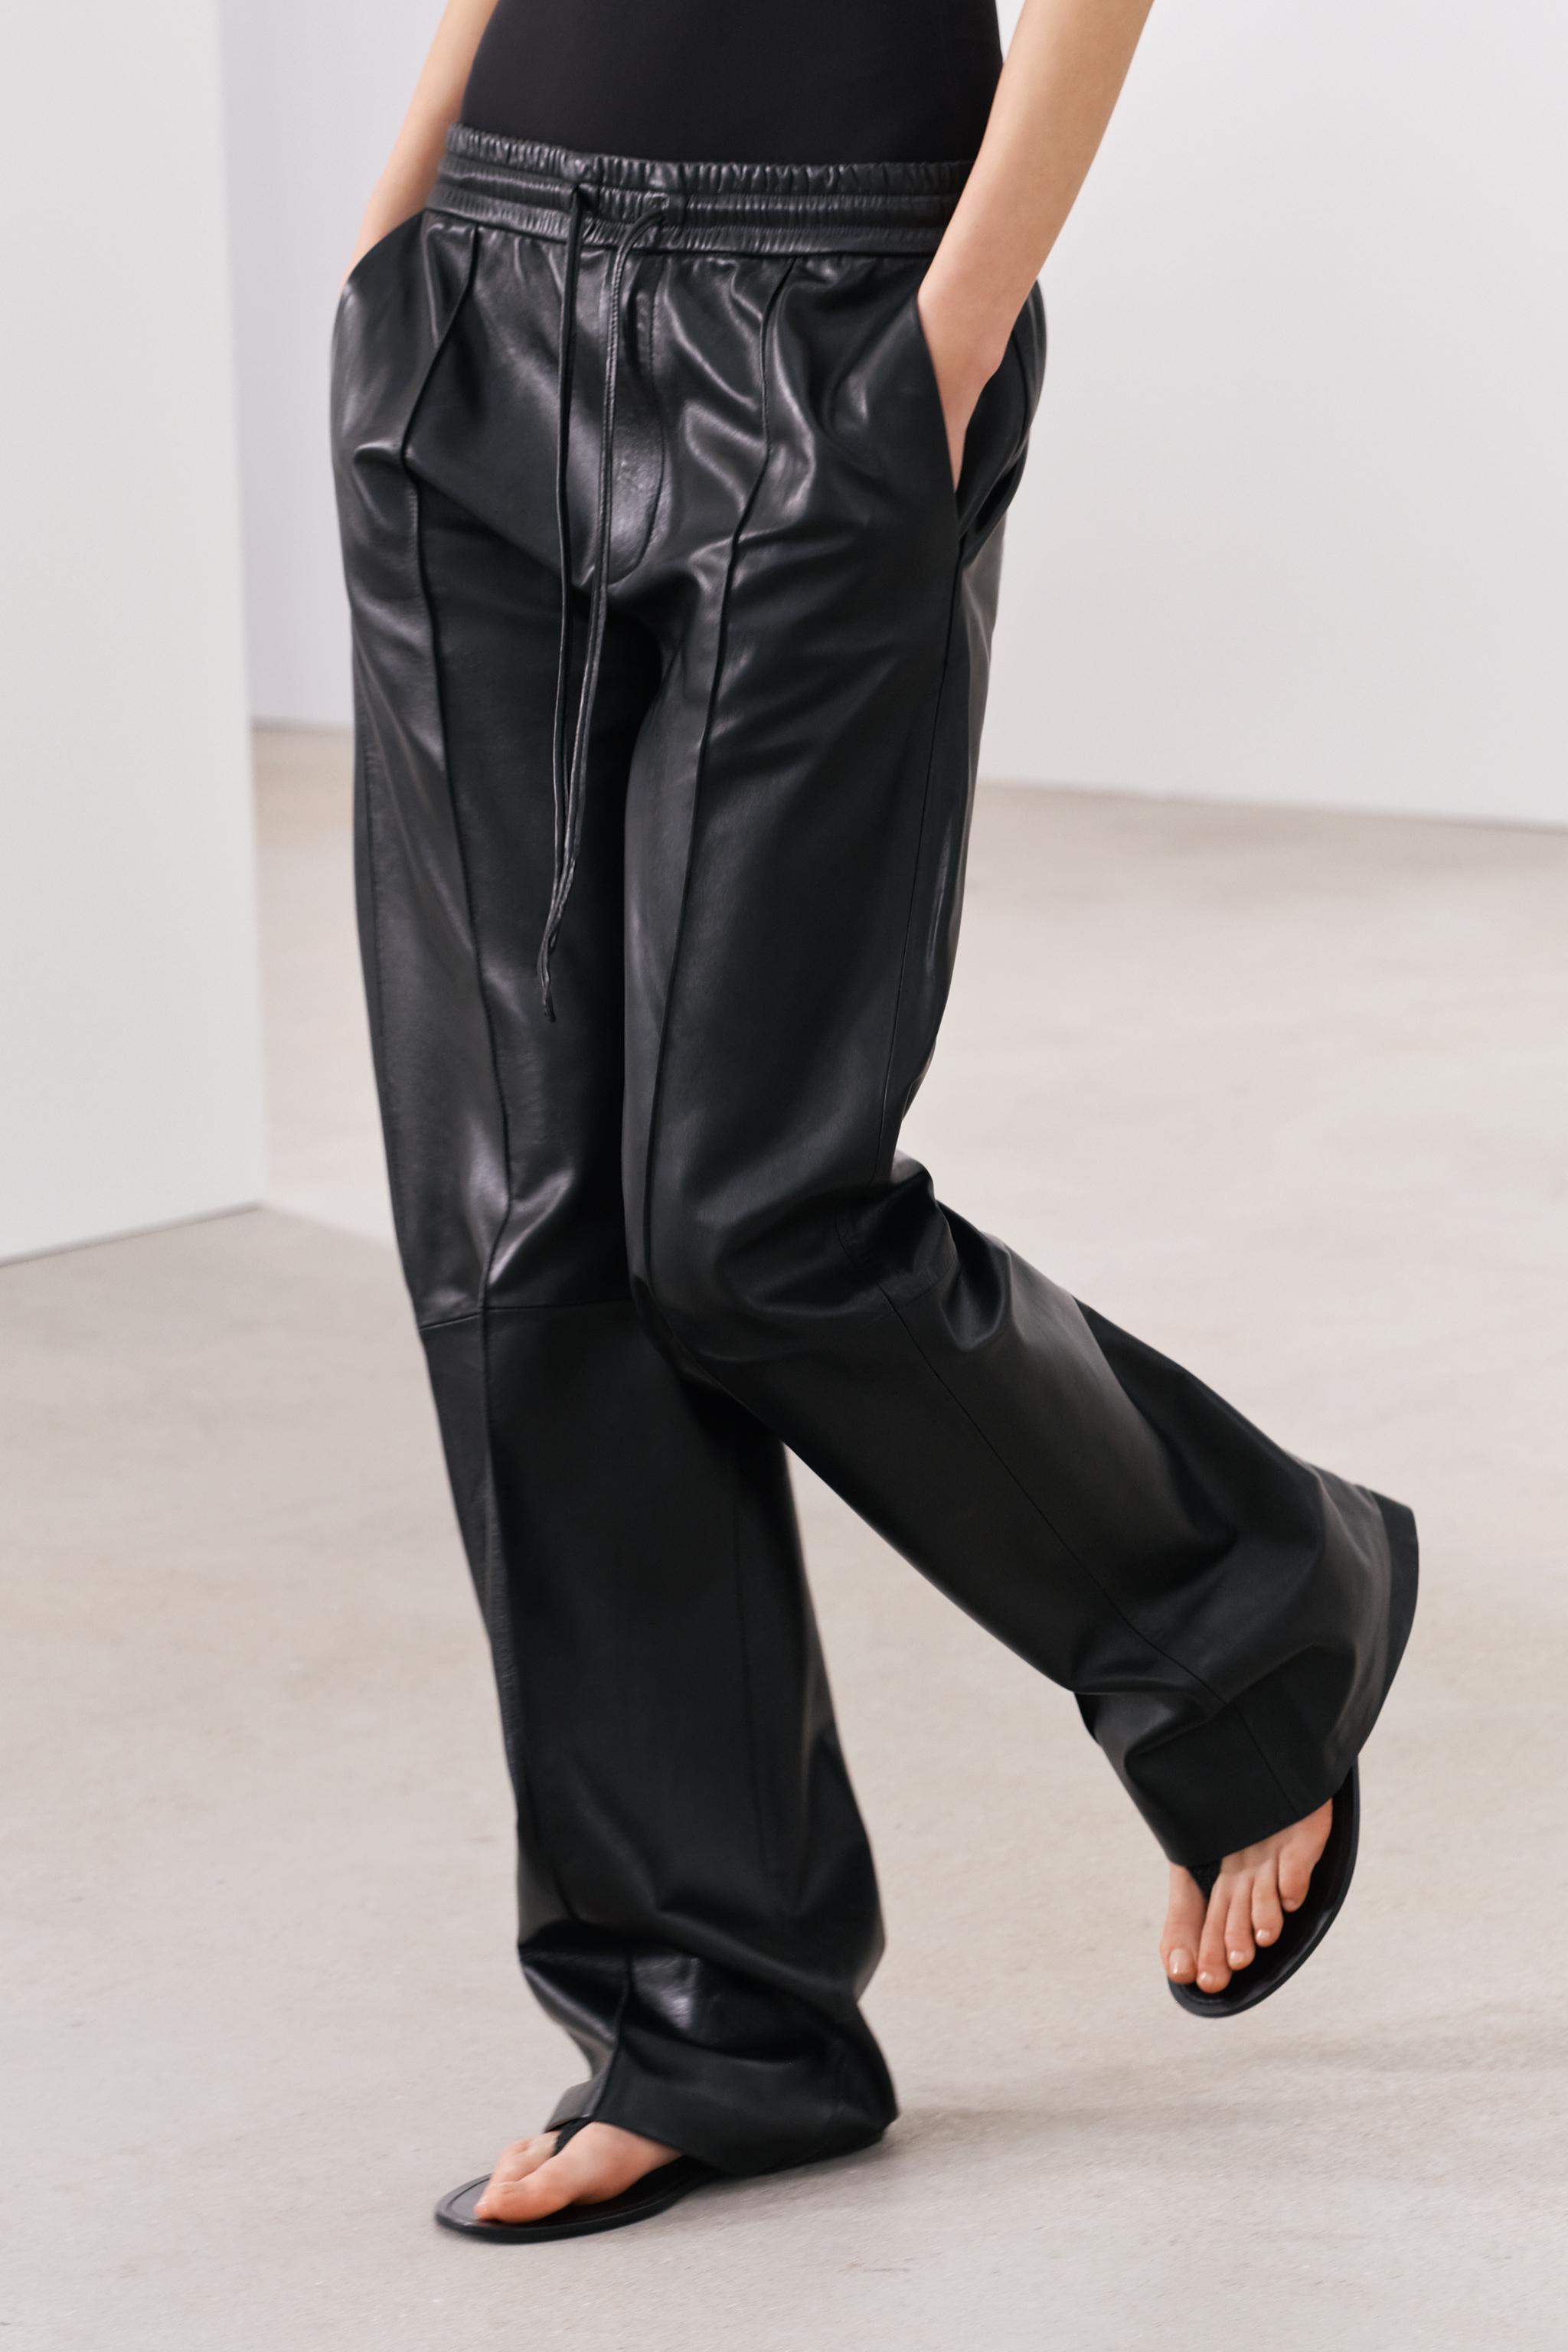 ZARA Denim Leather Pants for Women